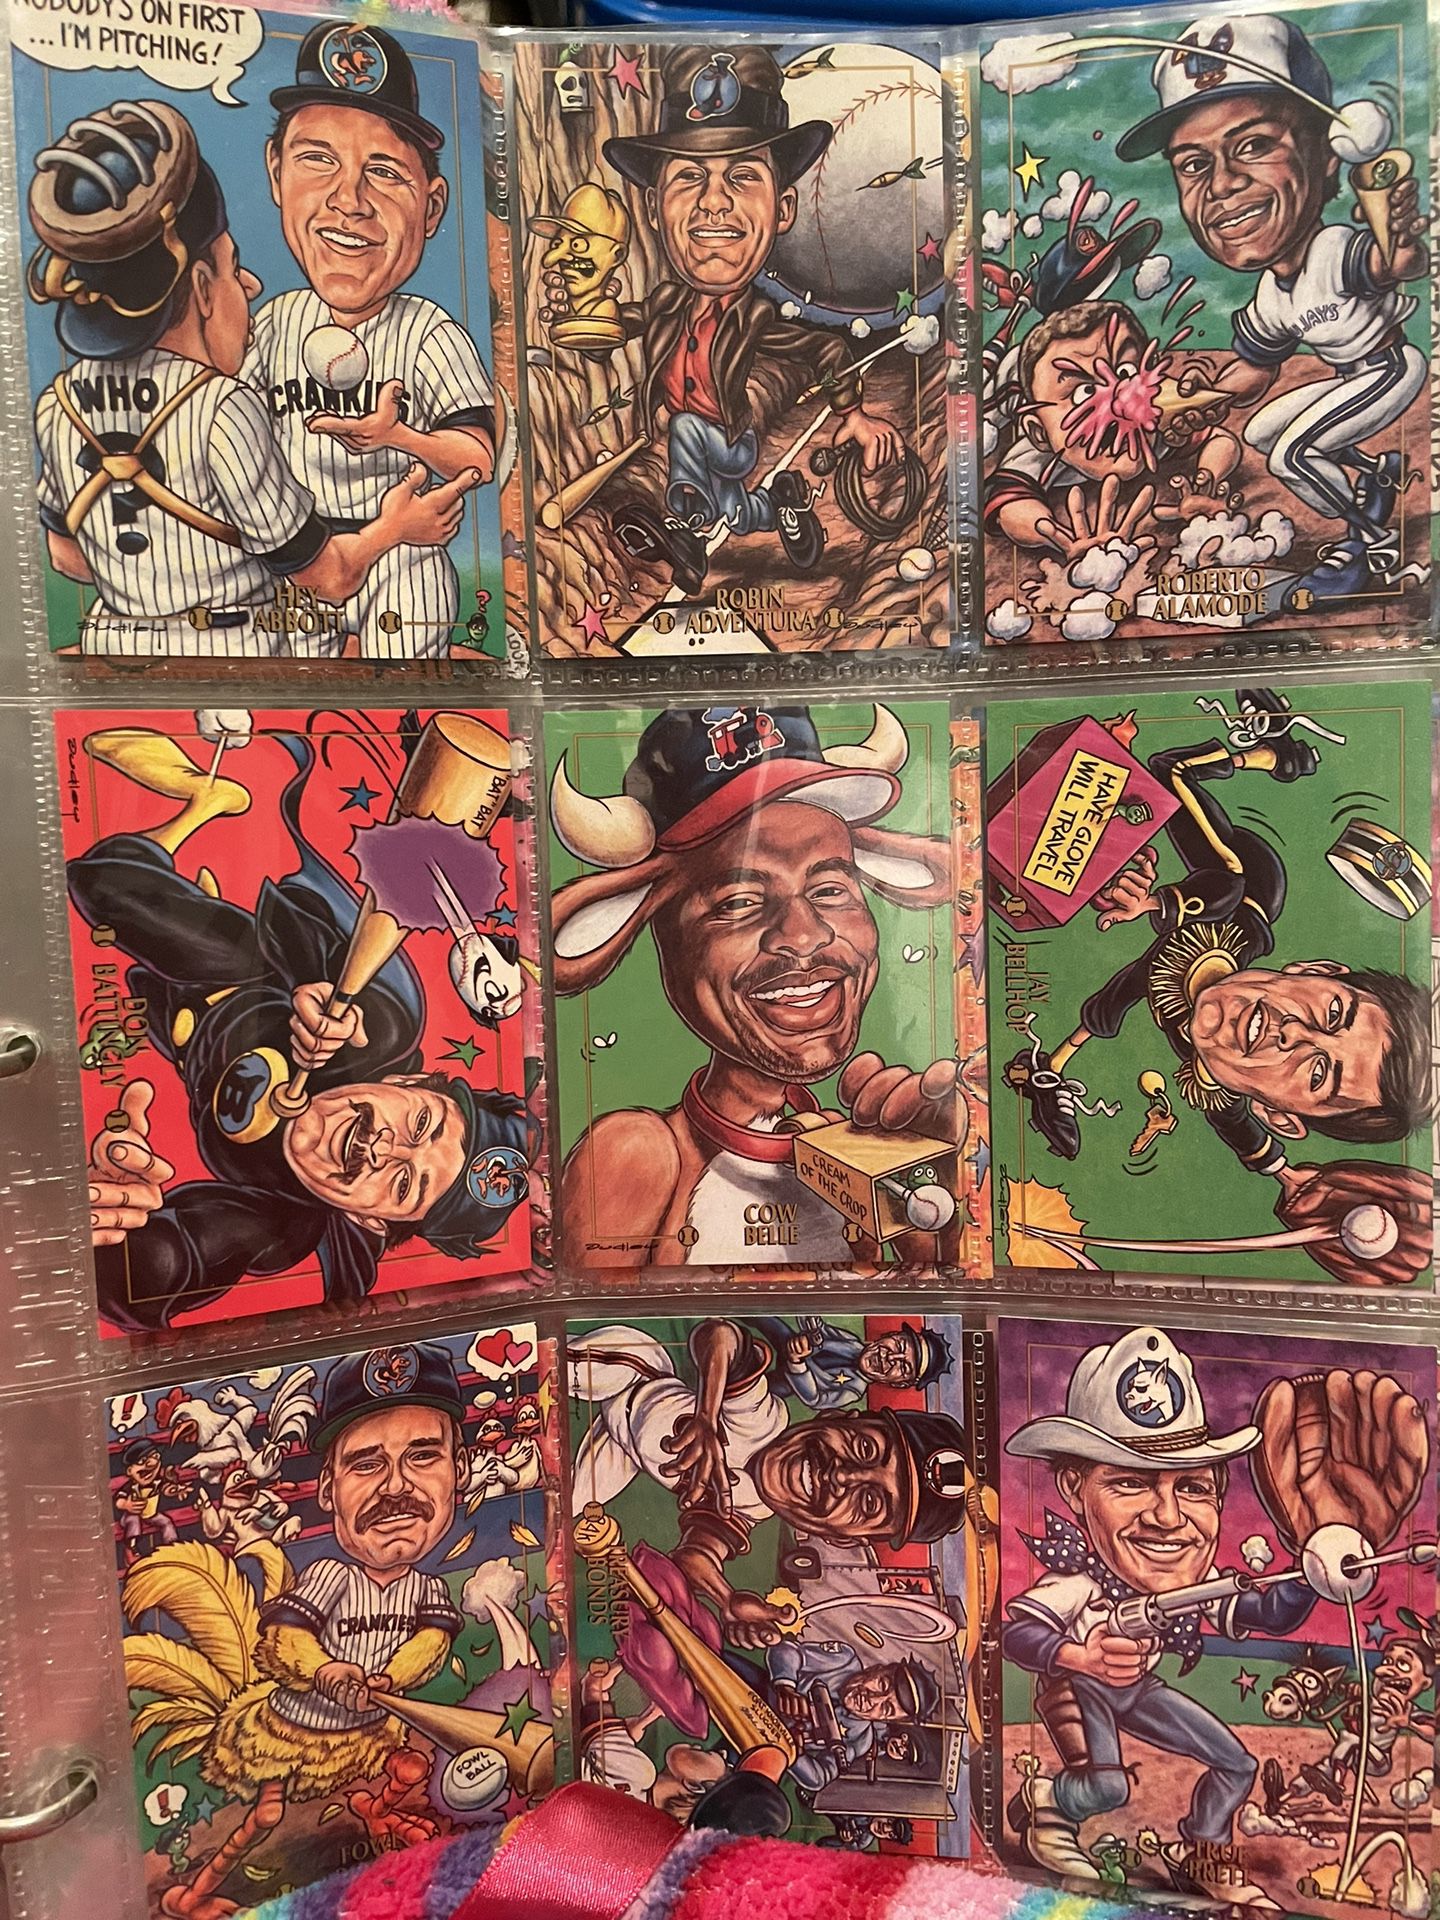 1993 Cardtoons Baseball Card Collection 